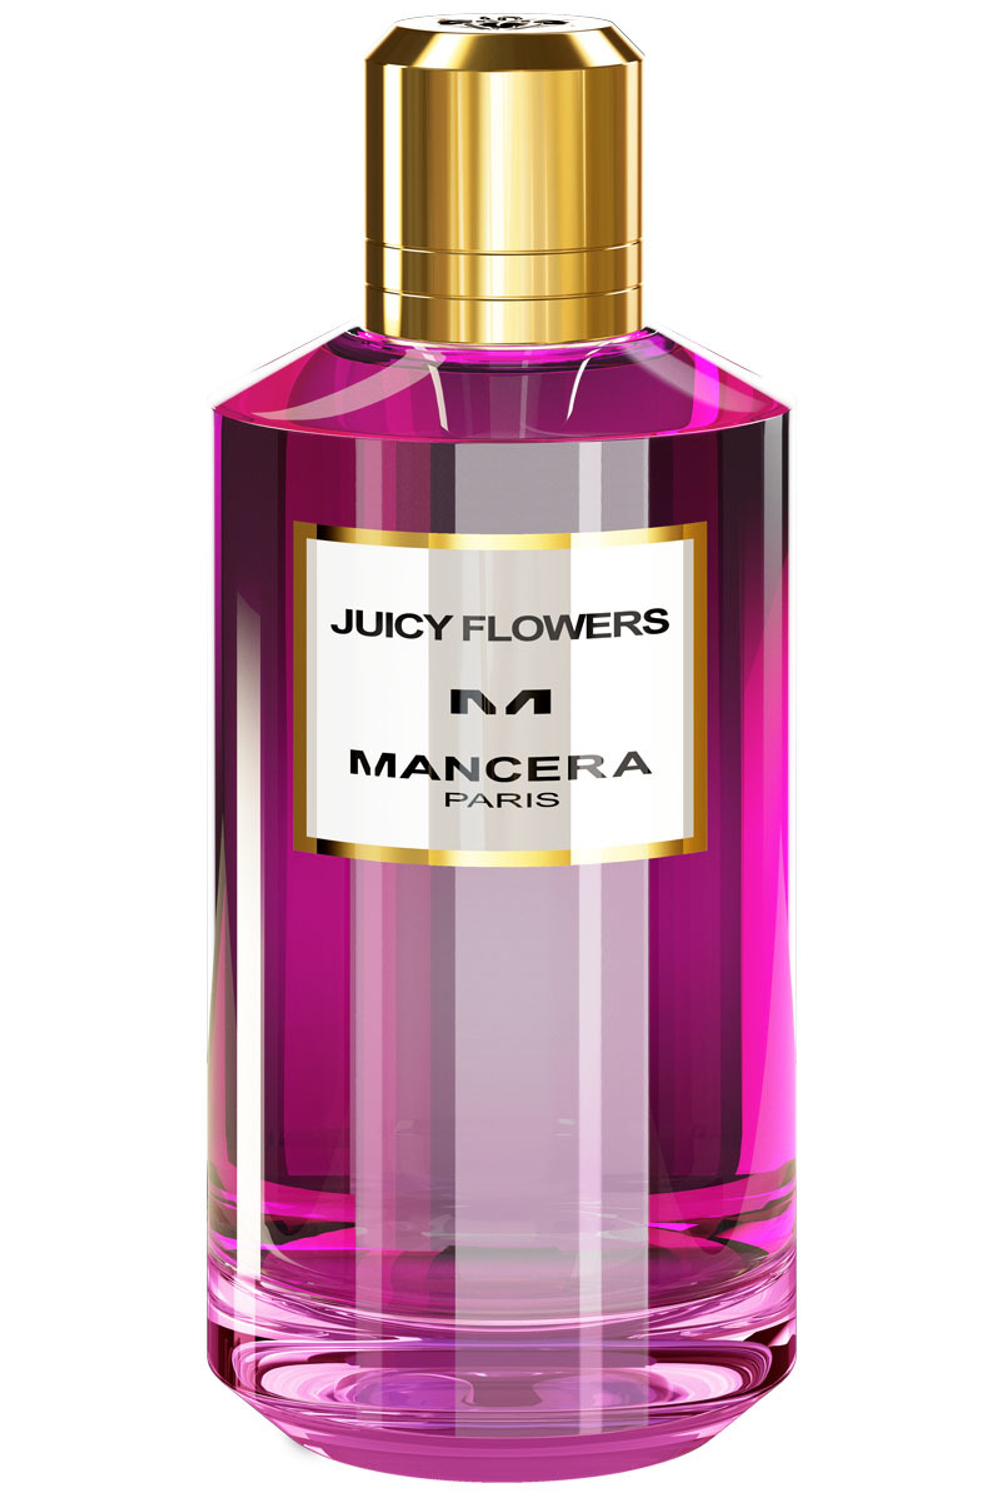 MANCERA JUICY FLOWERS lady 1 ml